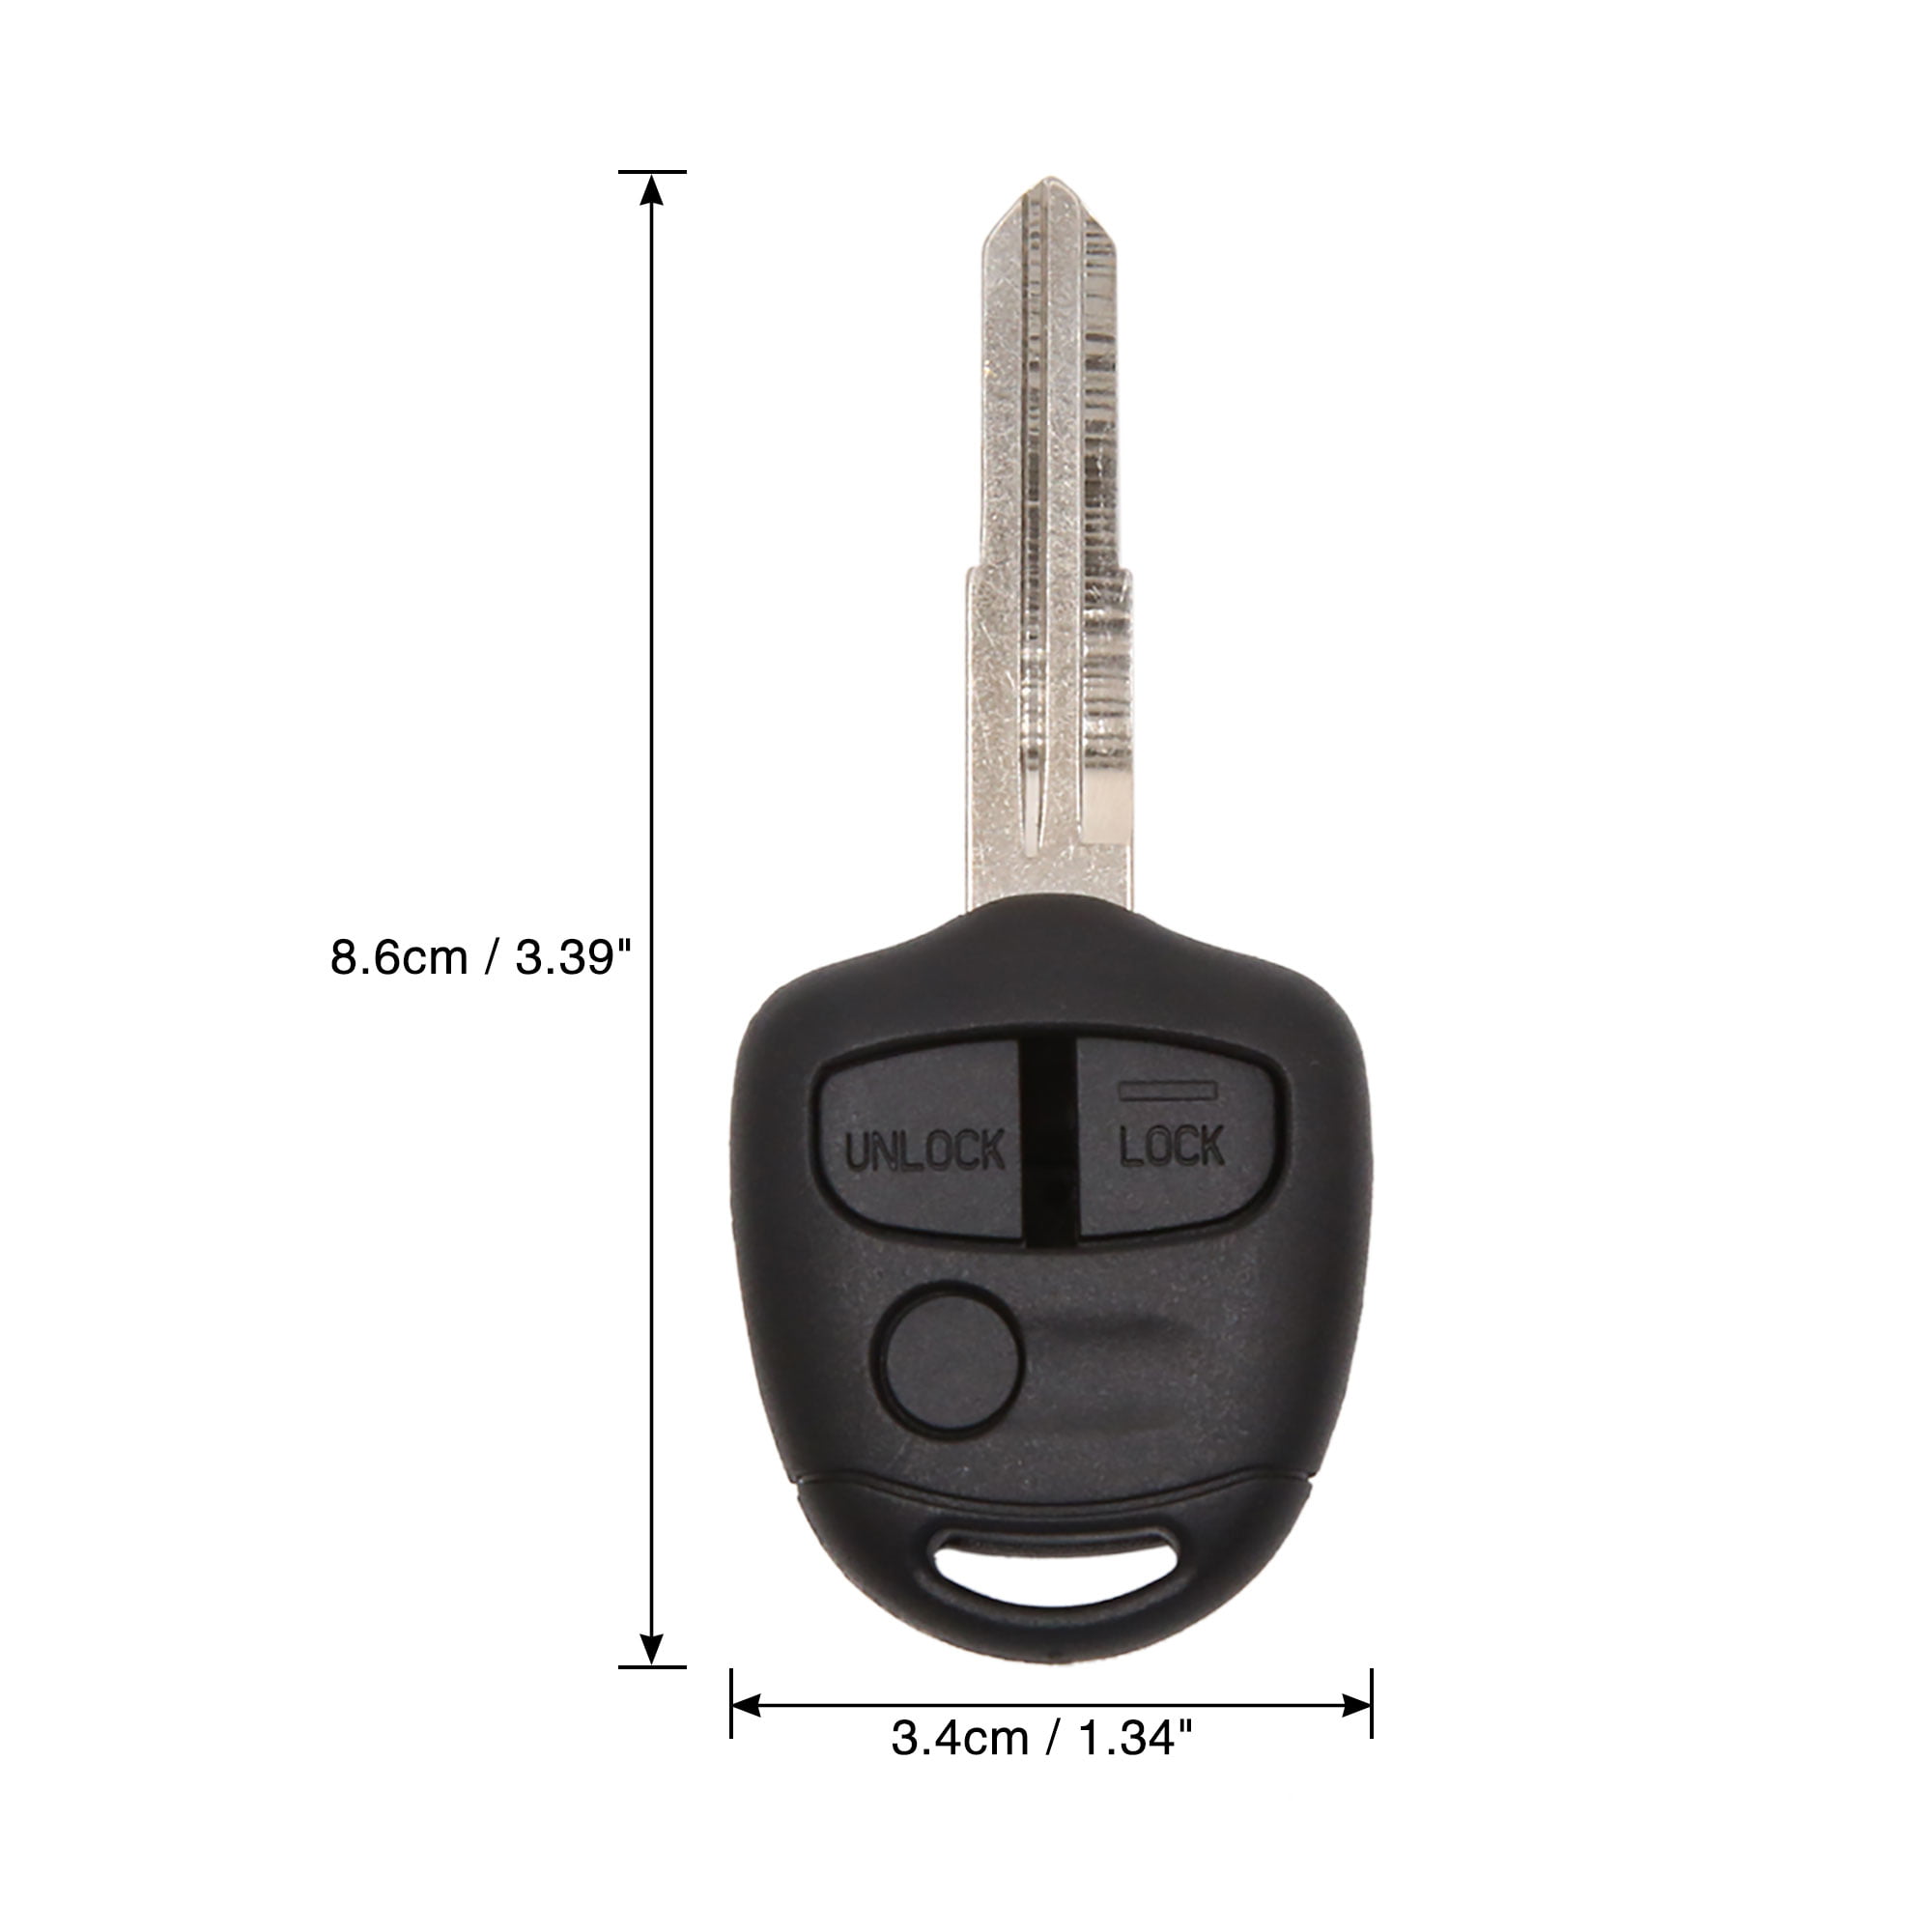 2 Buttons Remote Key Fob Shell for MITSUBISHI Lancer Evolution Grandis Outlander